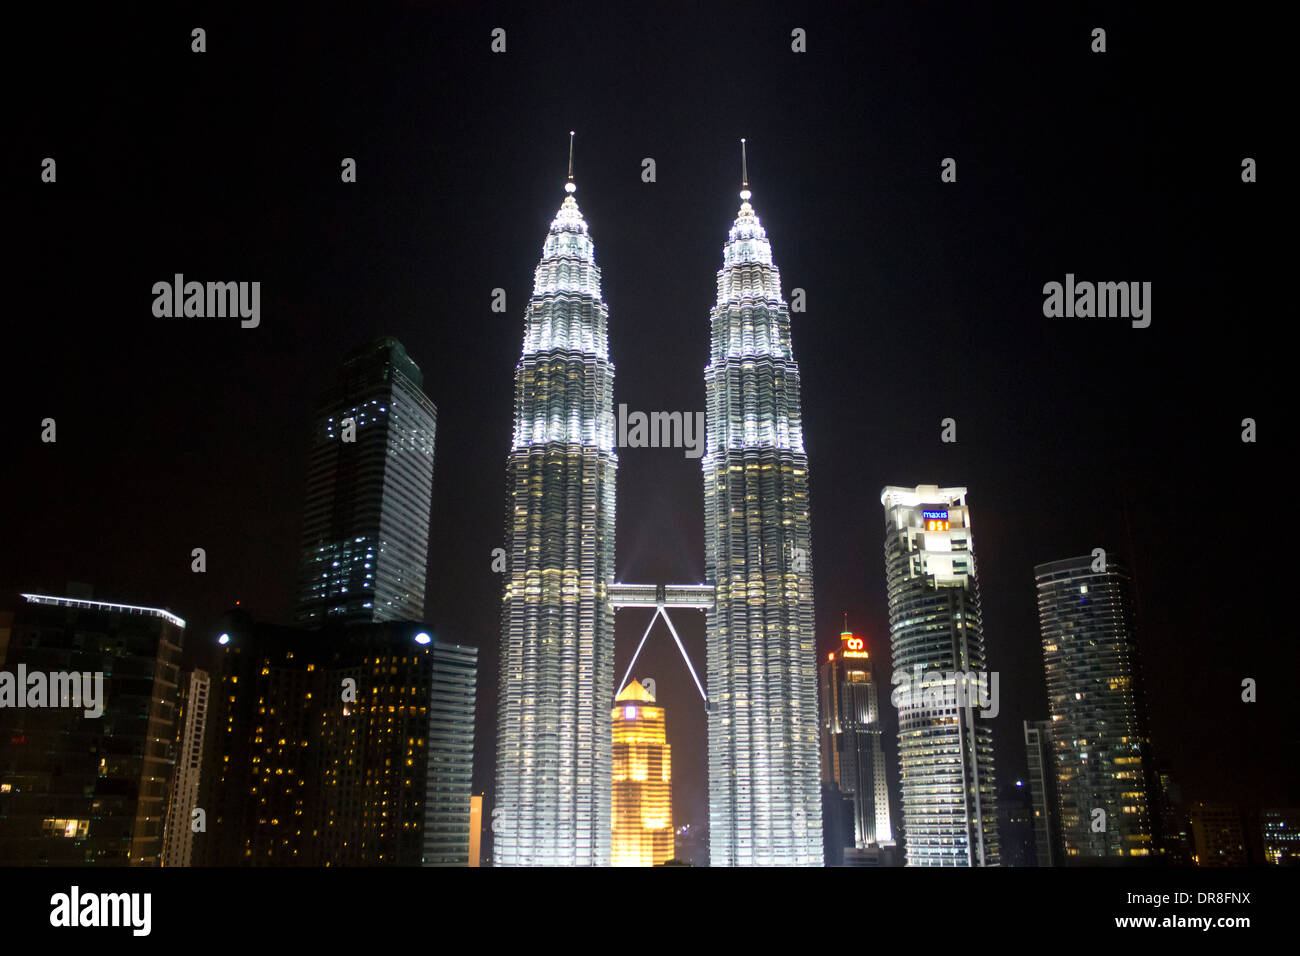 Illuminated Petronas Twin Towers at night Stock Photo